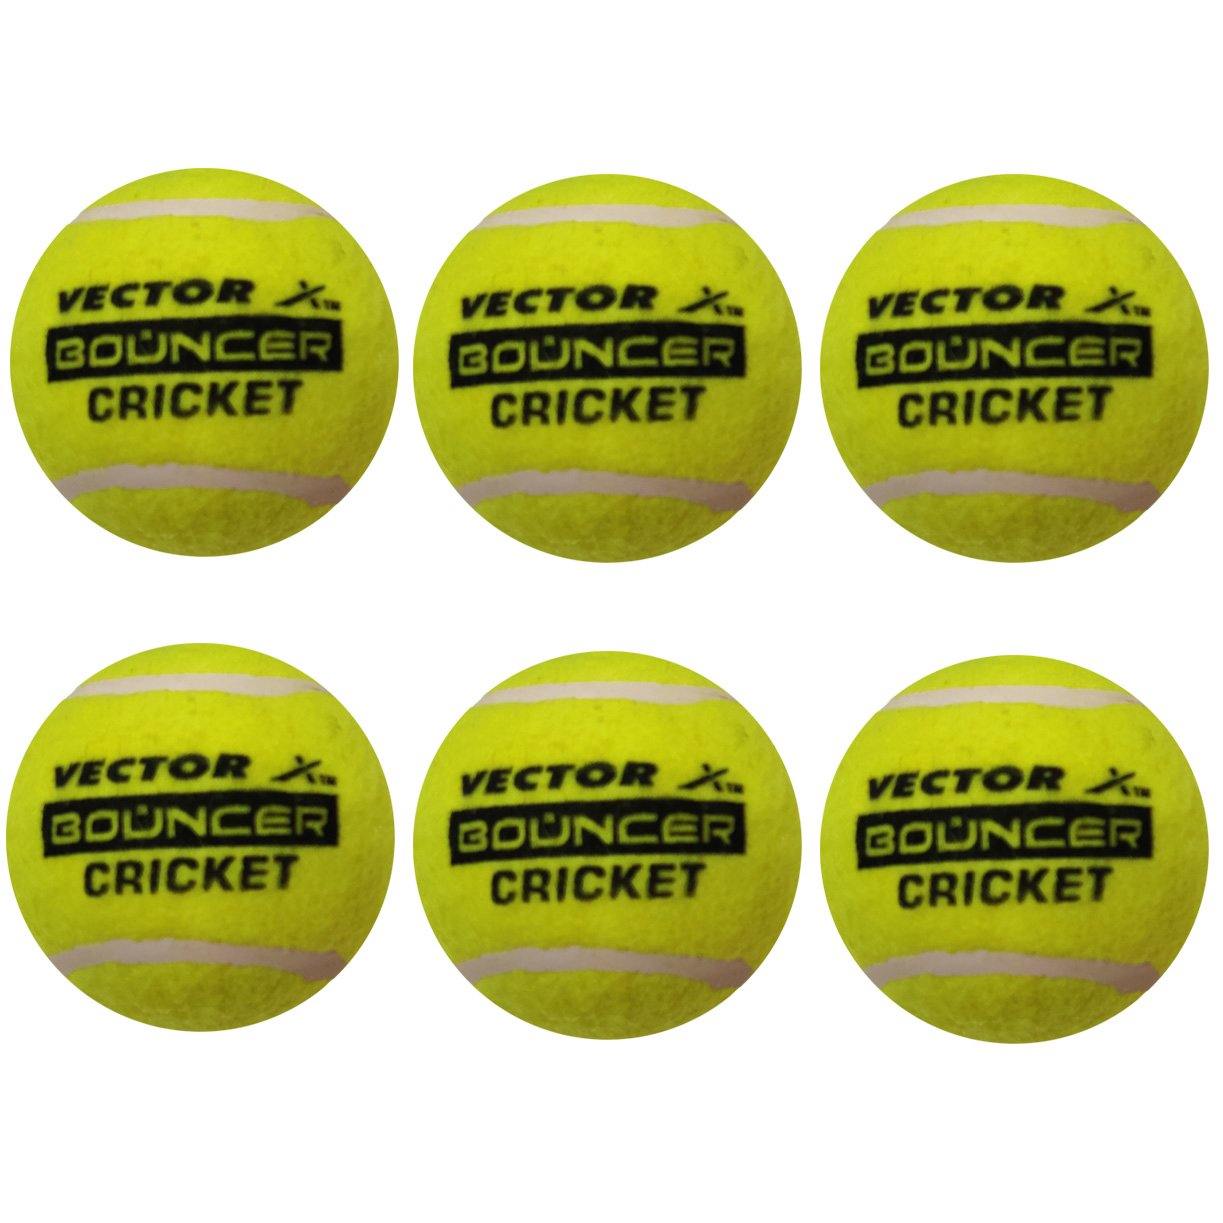 Vector X Tennis Cricket Ball, Pack of 6 (Yellow) - Heavy - Best Price online Prokicksports.com